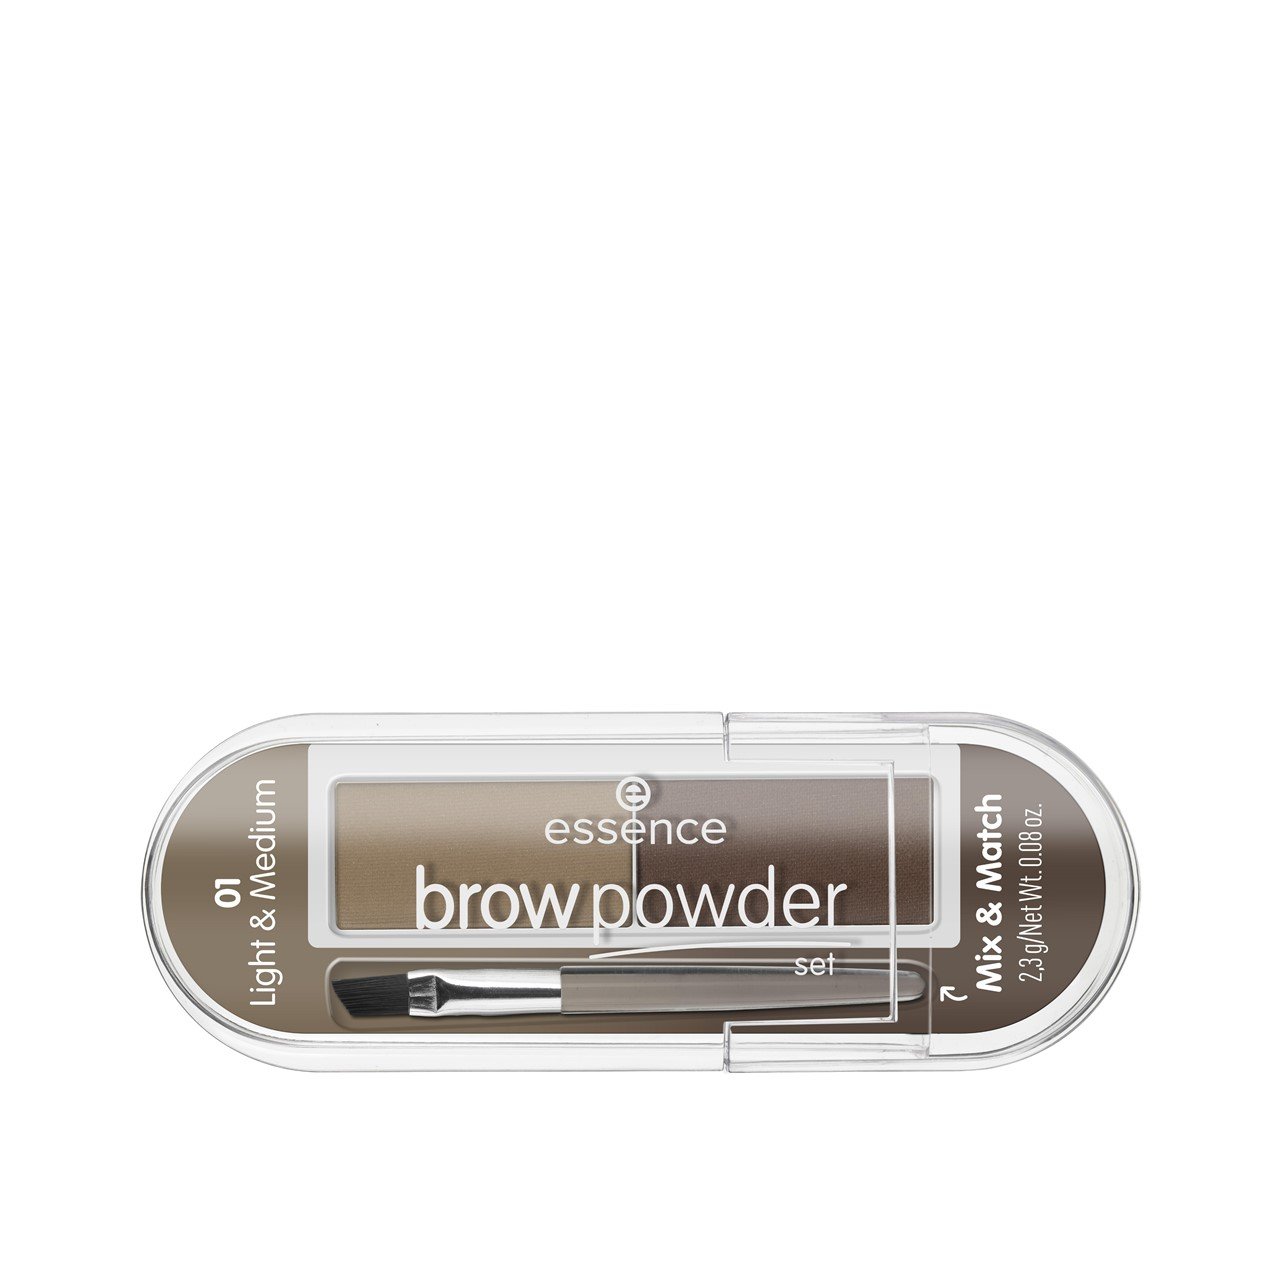 essence Brow Powder Set 01 Light & Medium 2.3g (0.08oz)